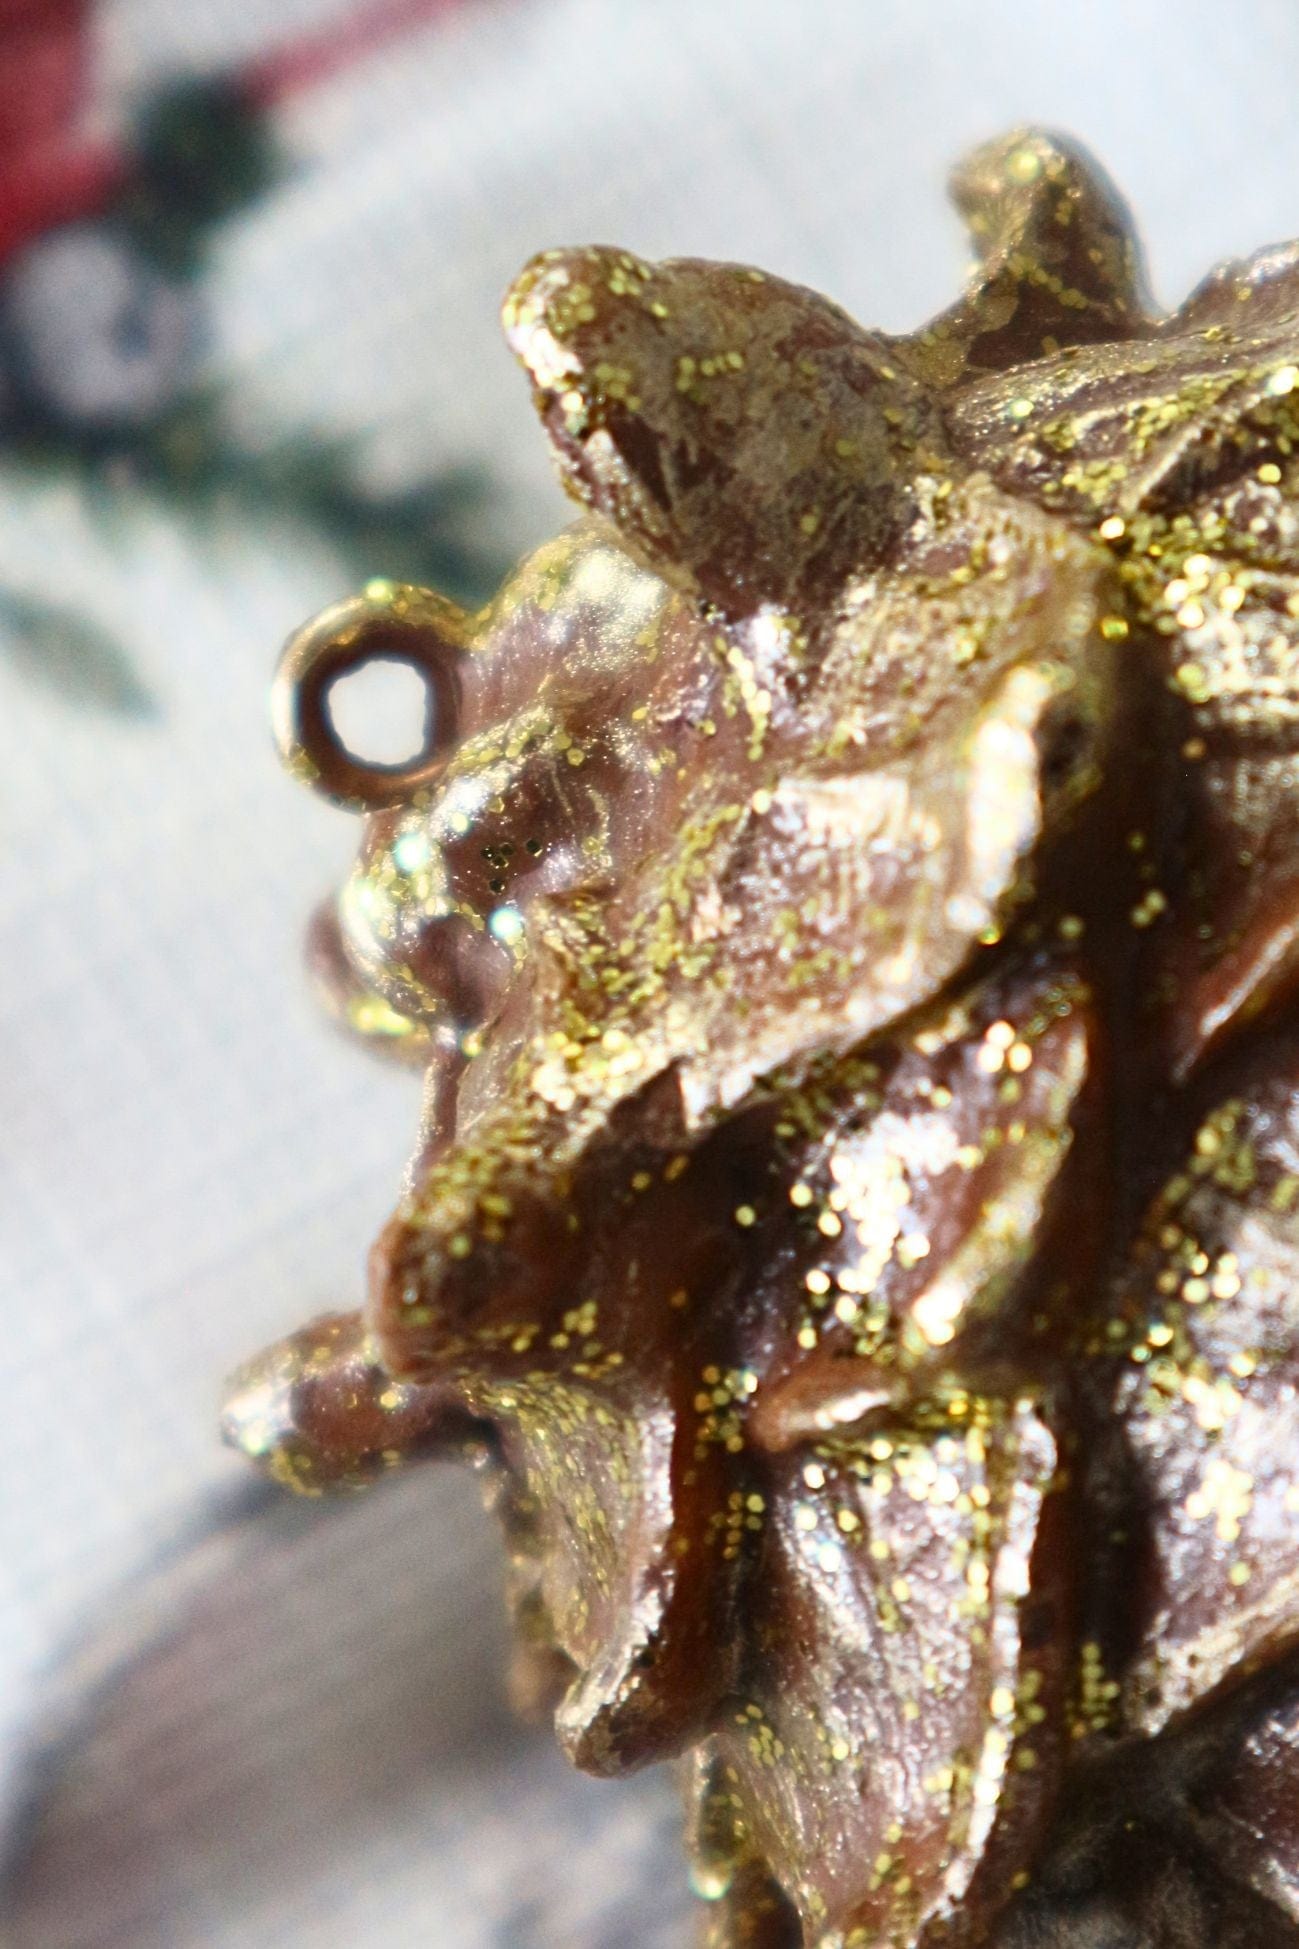 Item International Kotte Kotte - Pigna decorativa natalizia in resina dorata con glitter | Item International